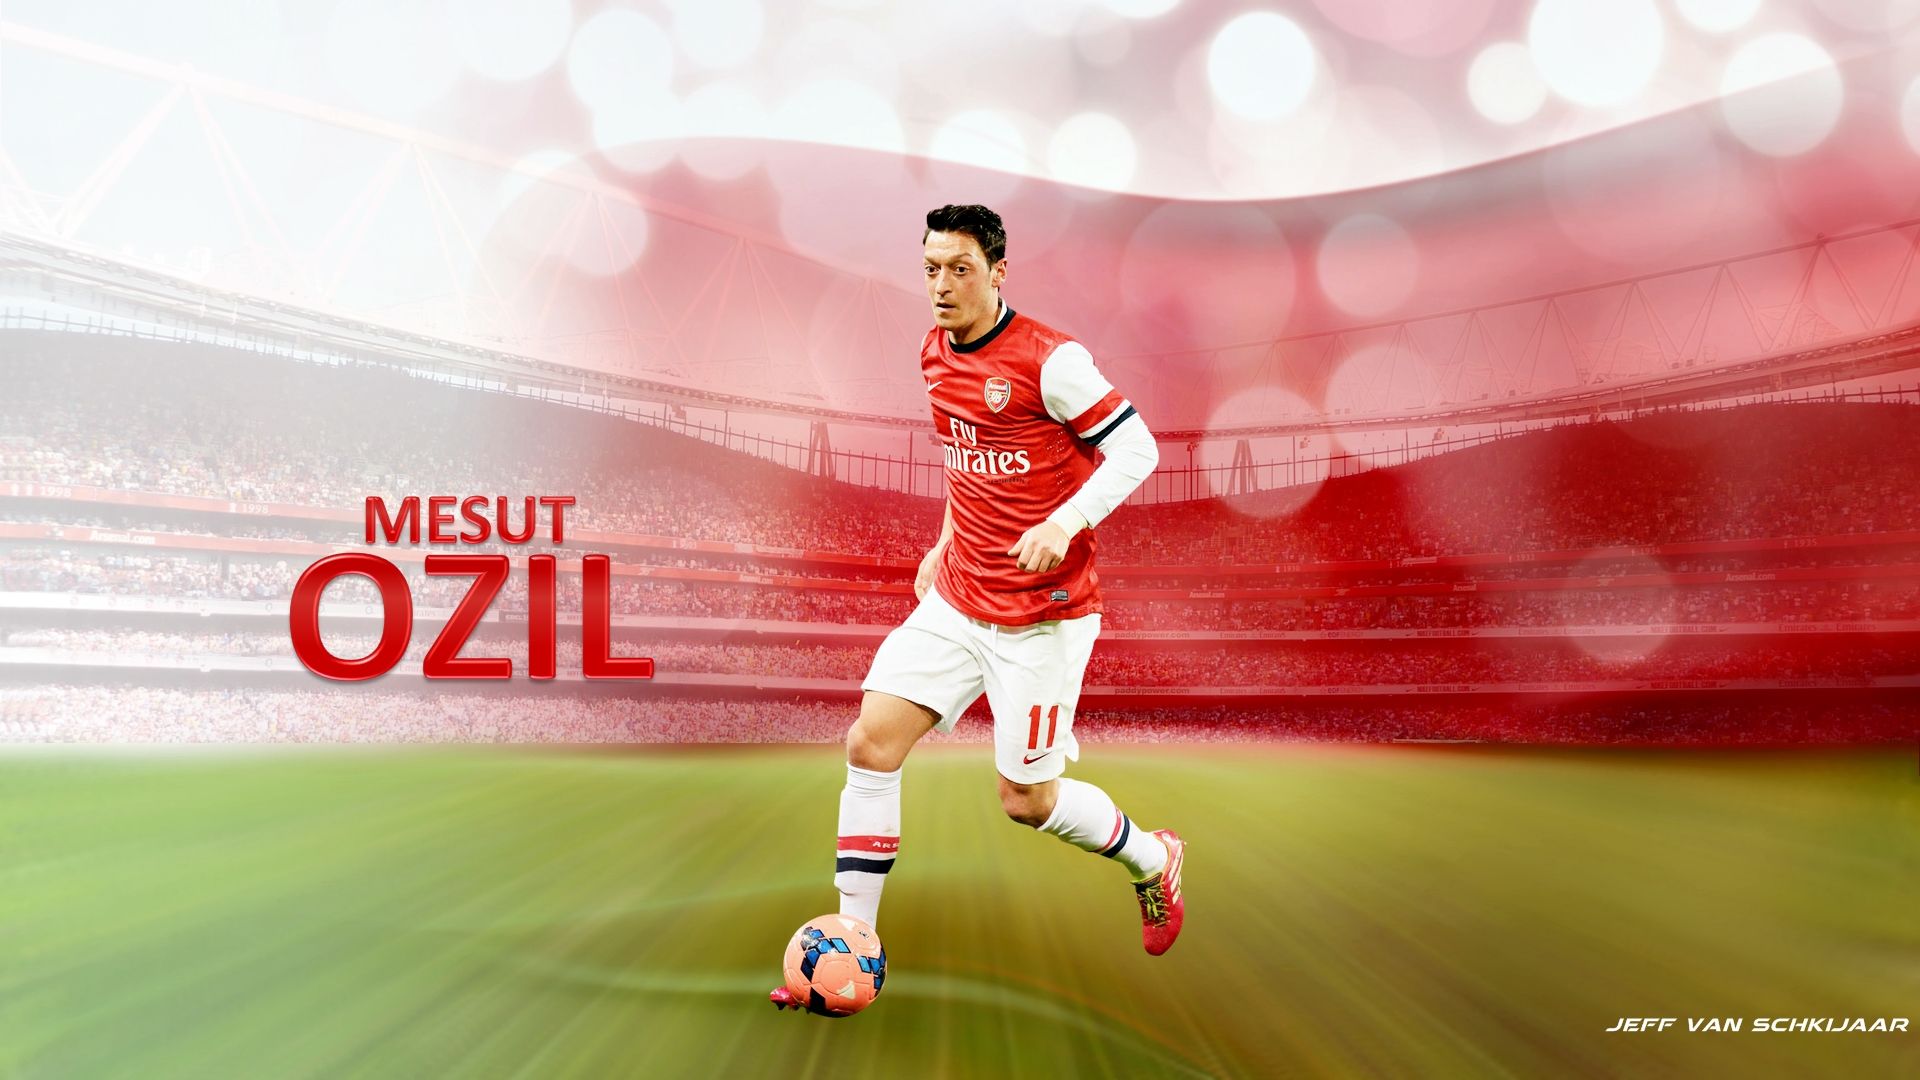 Mesut Ozil Arsenal Wallpaper HD 2014 2 Football Wallpaper HD